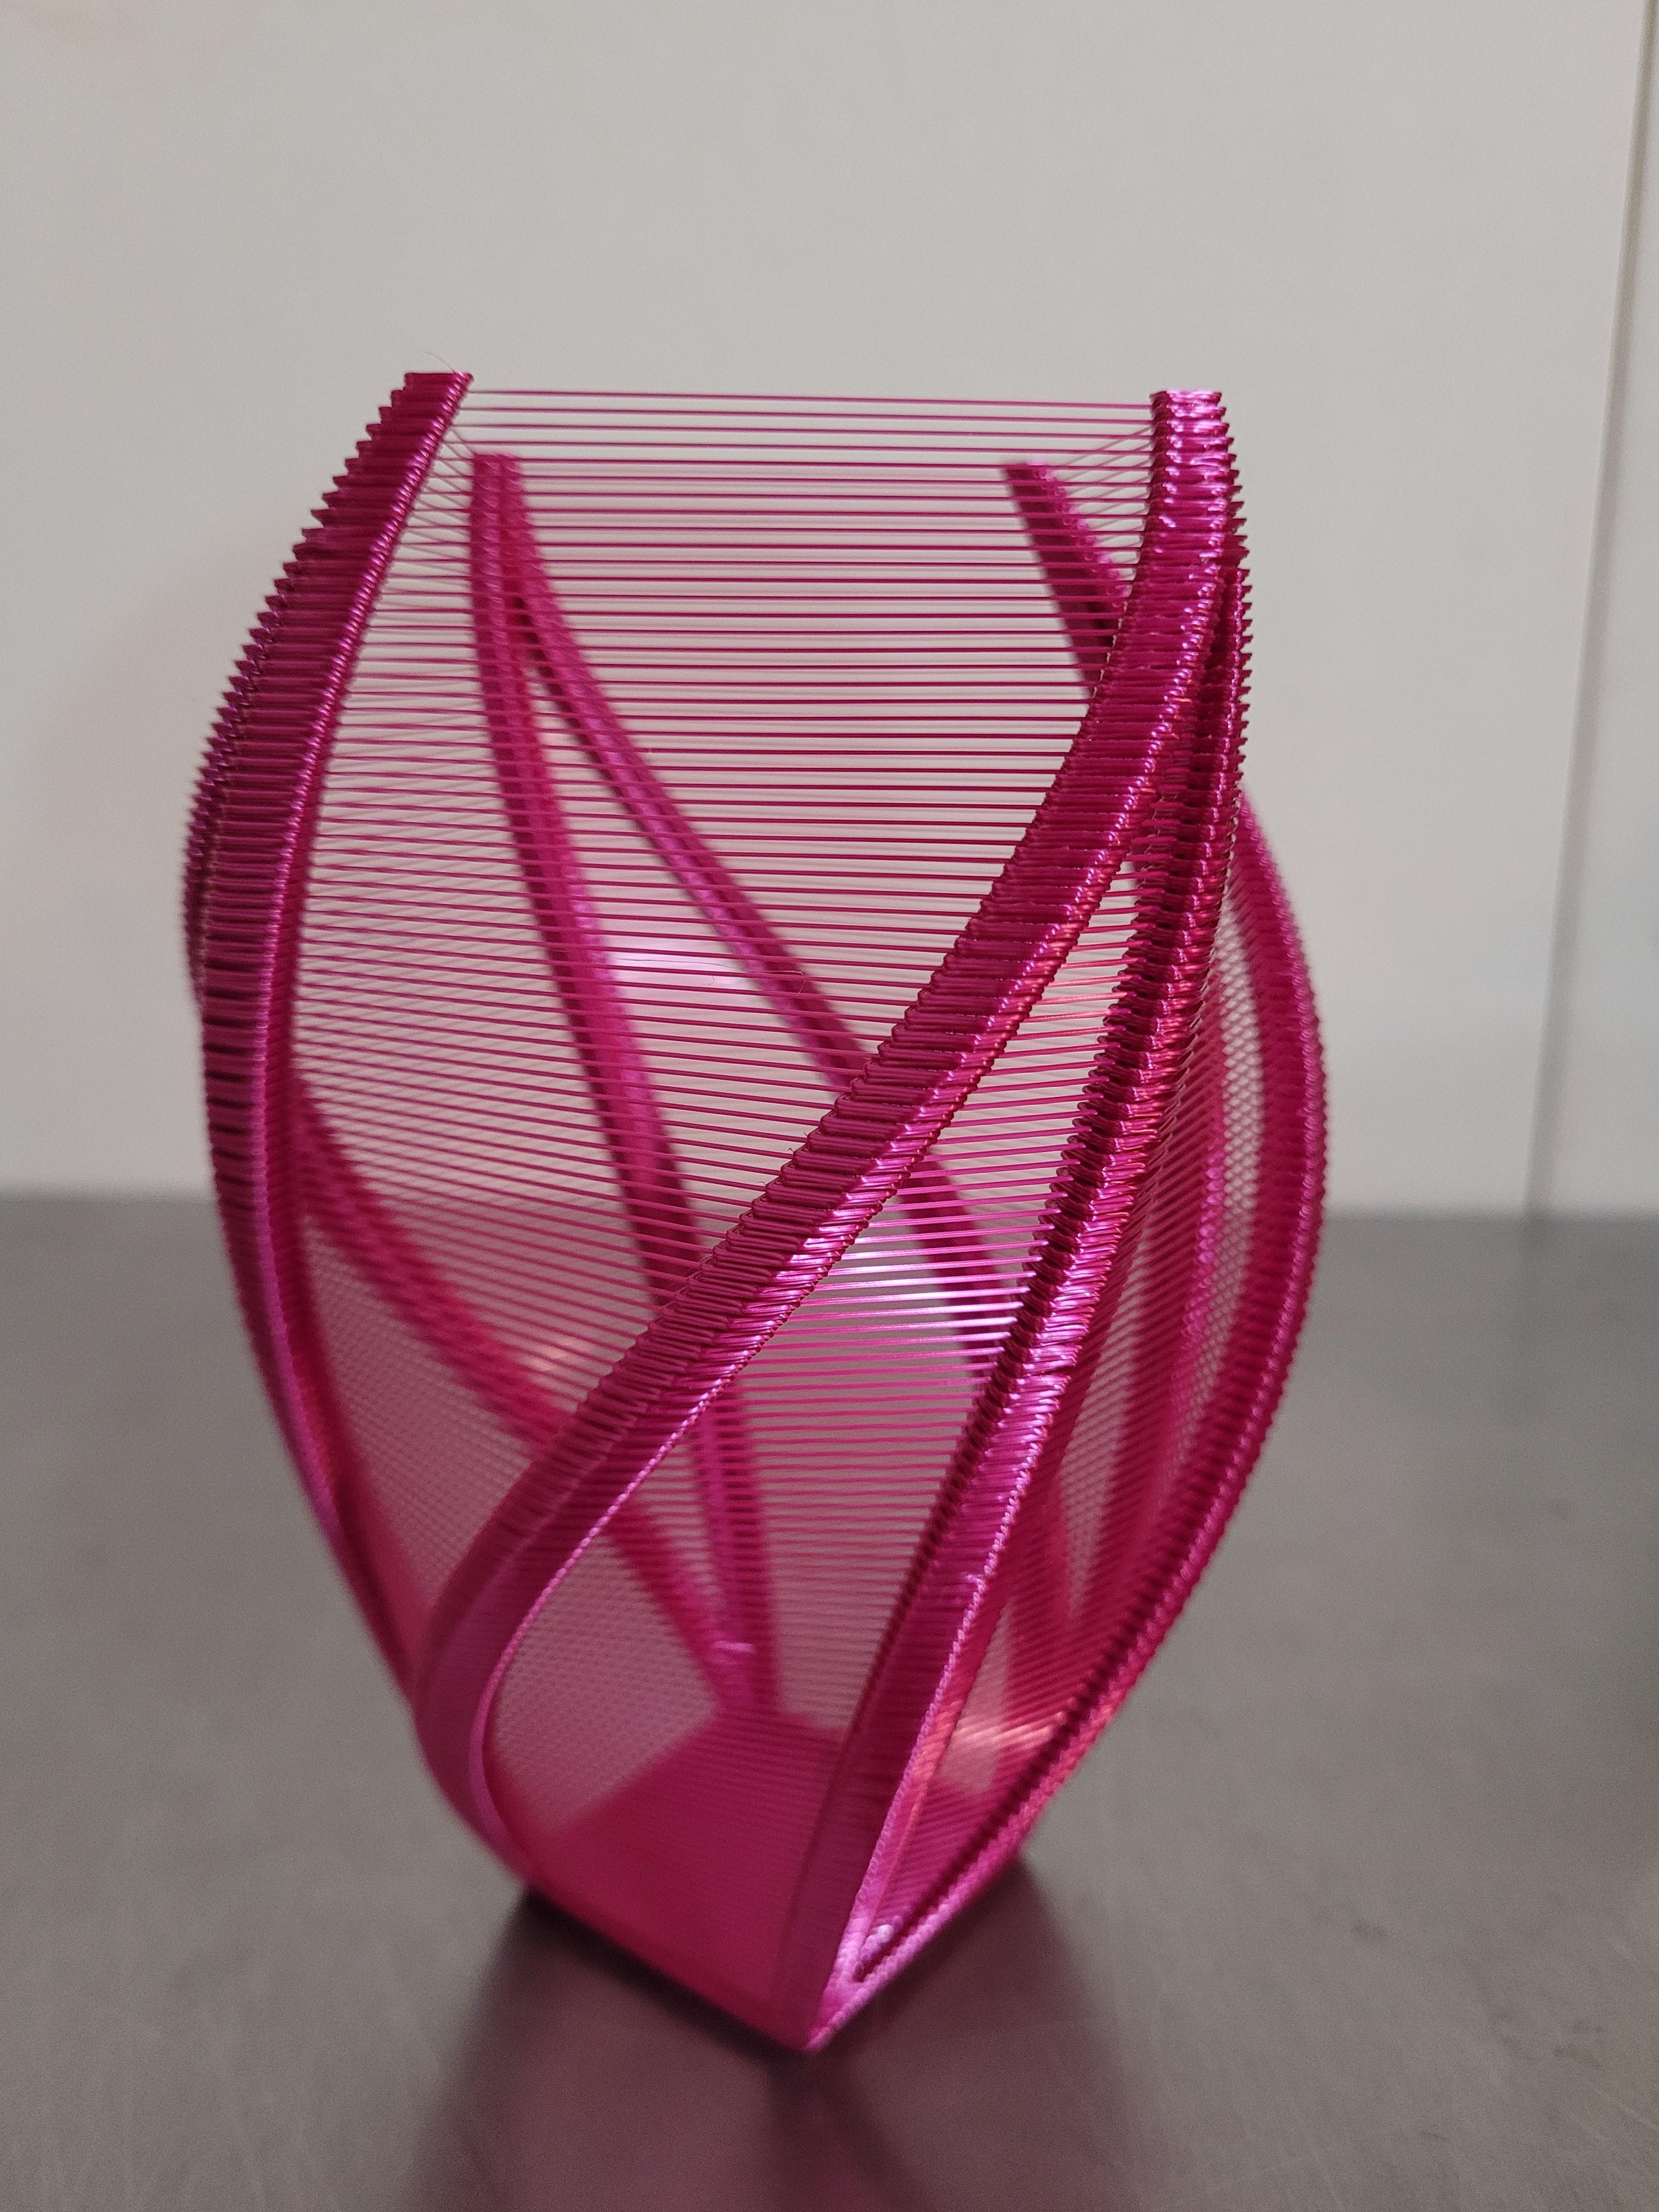 Twisty String Vase - PolyLite Silk Magenta. I love it! - 3d model